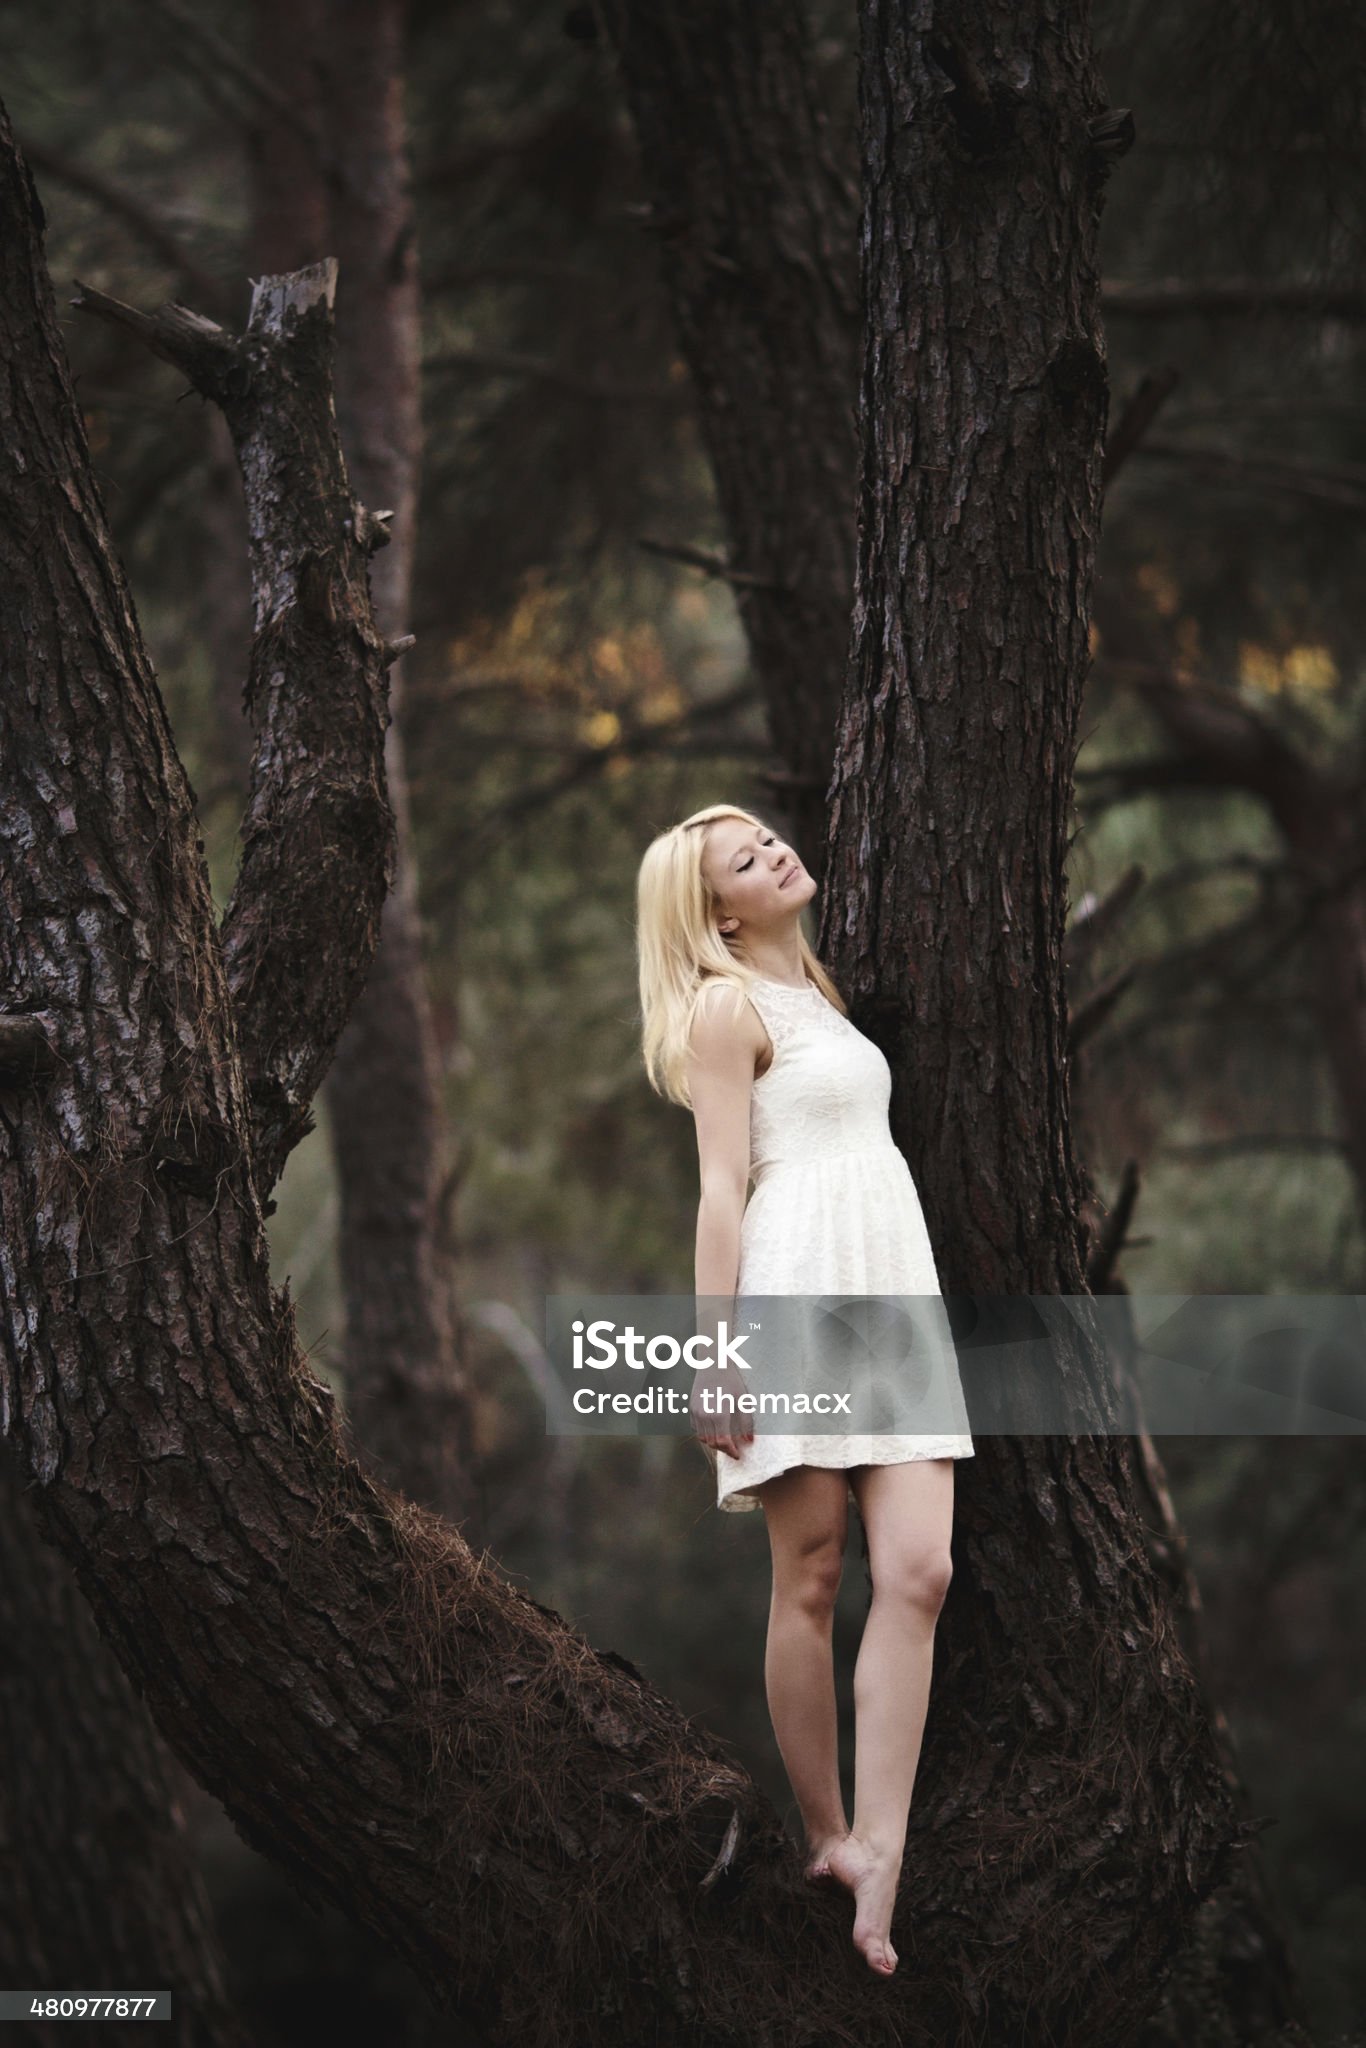 https://media.istockphoto.com/id/480977877/photo/beautiful-girl-in-a-forest-on-tree.jpg?s=2048x2048&amp;w=is&amp;k=20&amp;c=68Yi0U84fU_68MEcy0ght_iS9JV41jOgL2YEM_IDI-o=